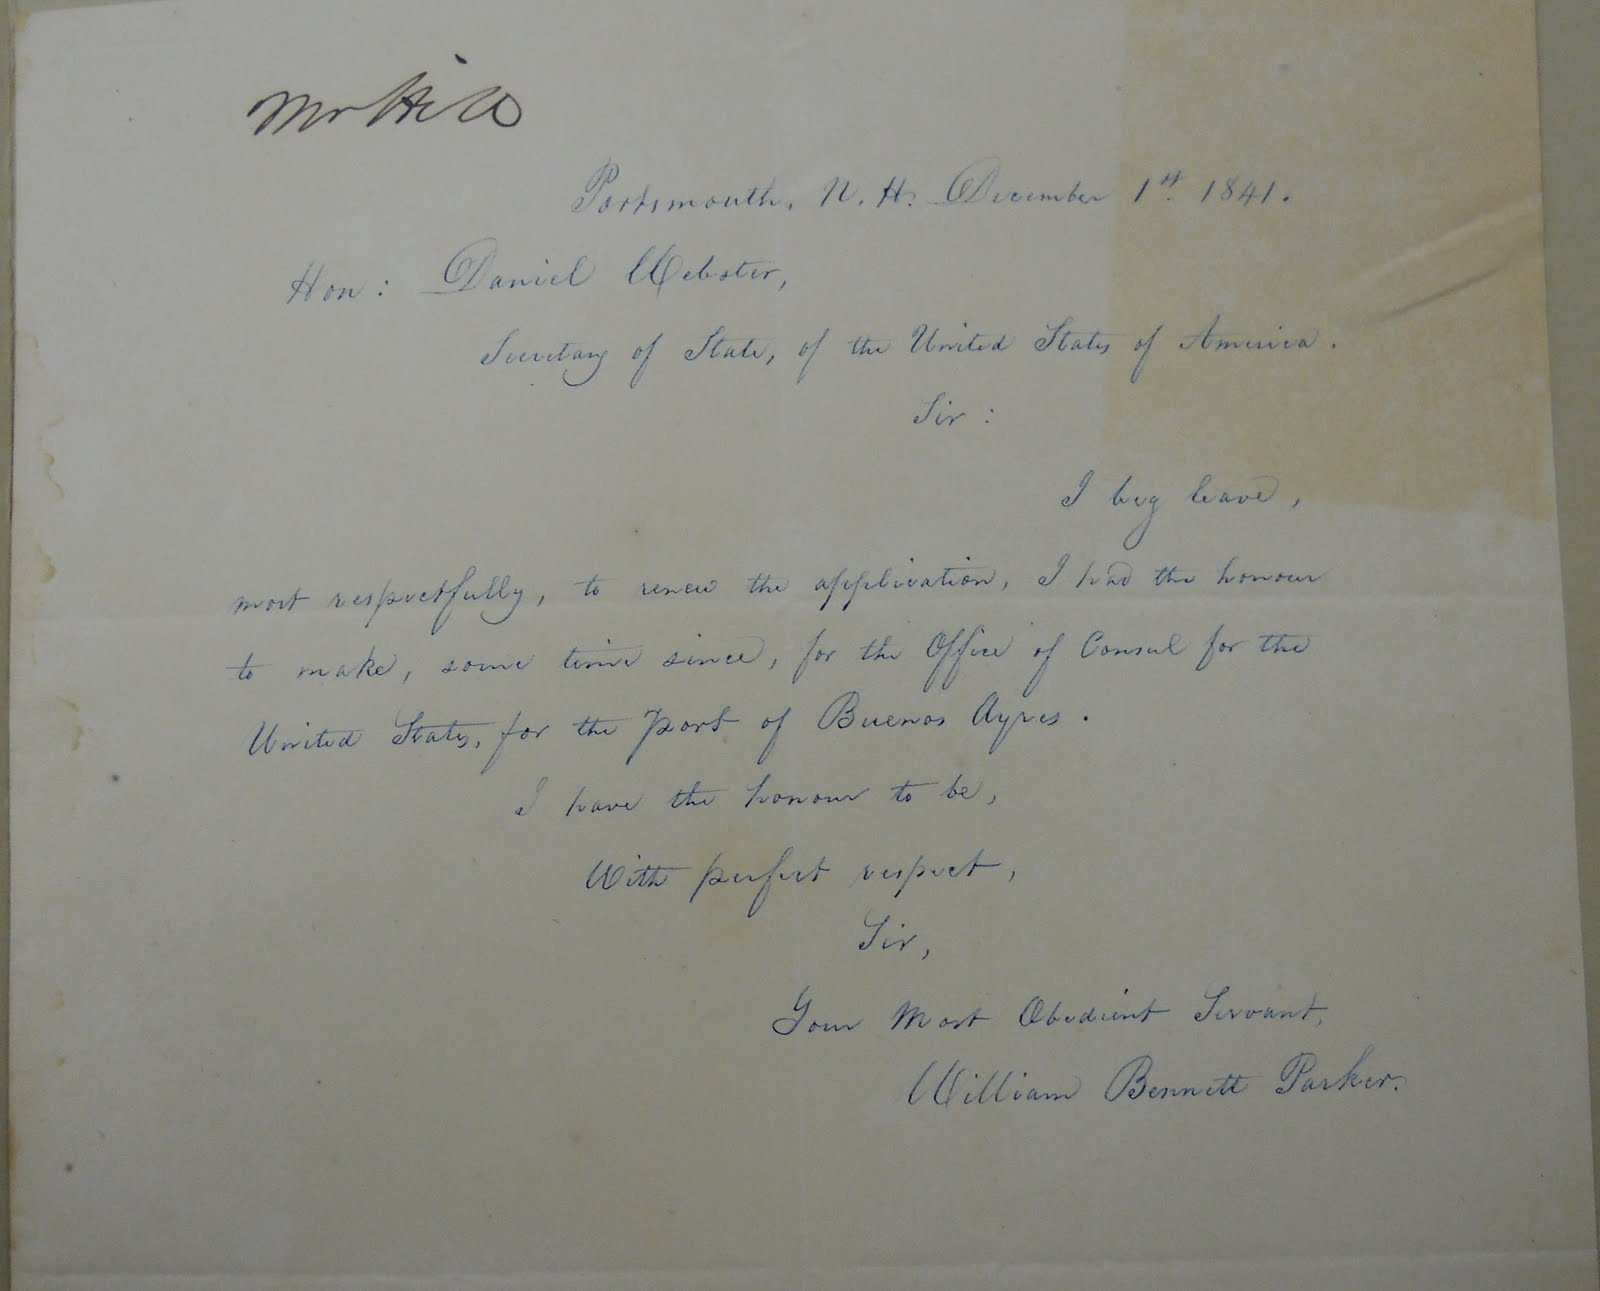 William Bennett Parker letter to Daniel Webster dated Dec. 1, 1841, handwritten, pen and ink